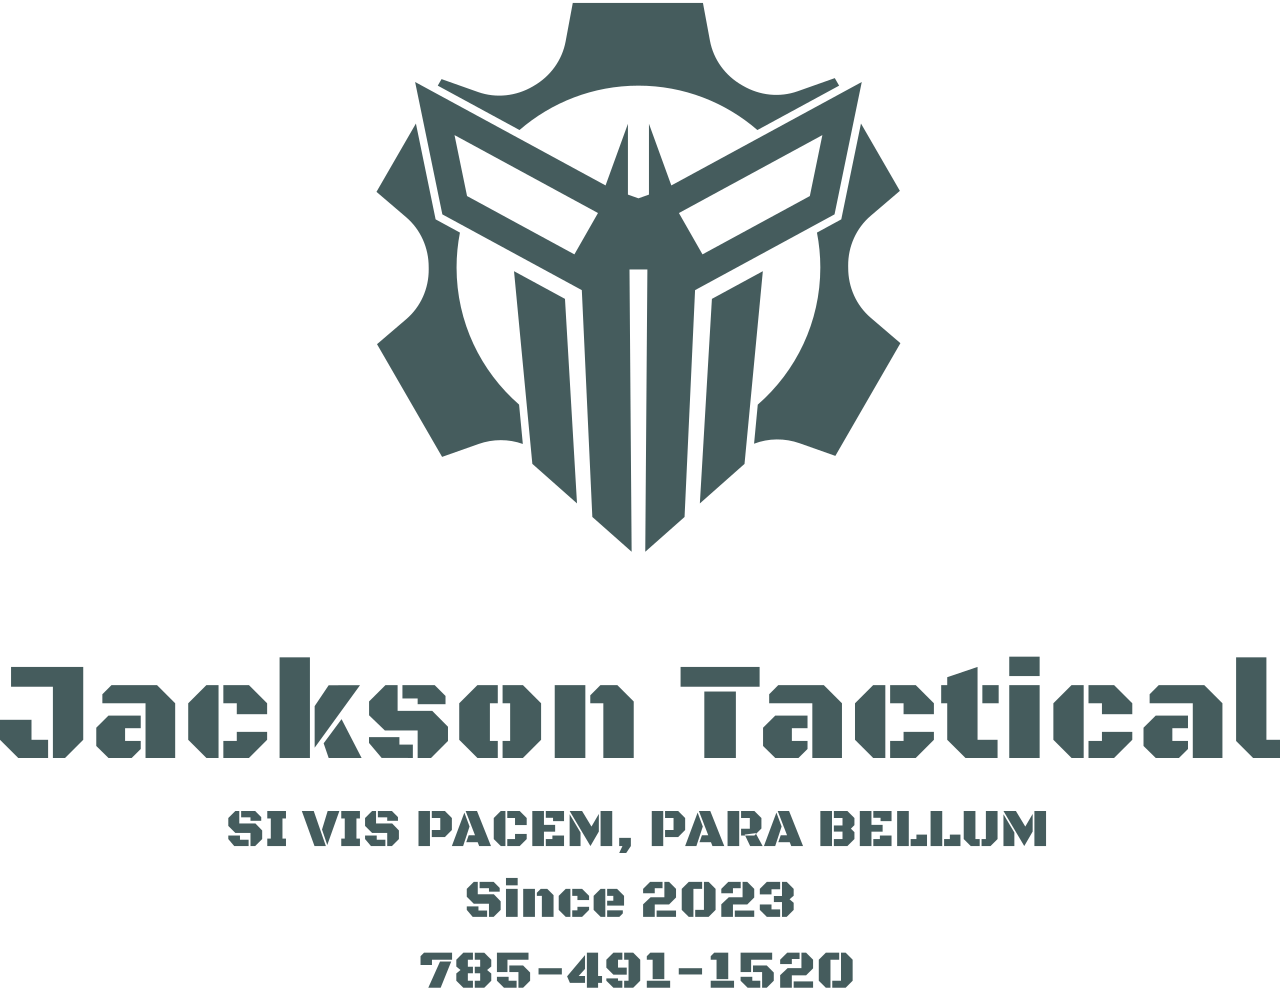 Jackson Tactical's web page